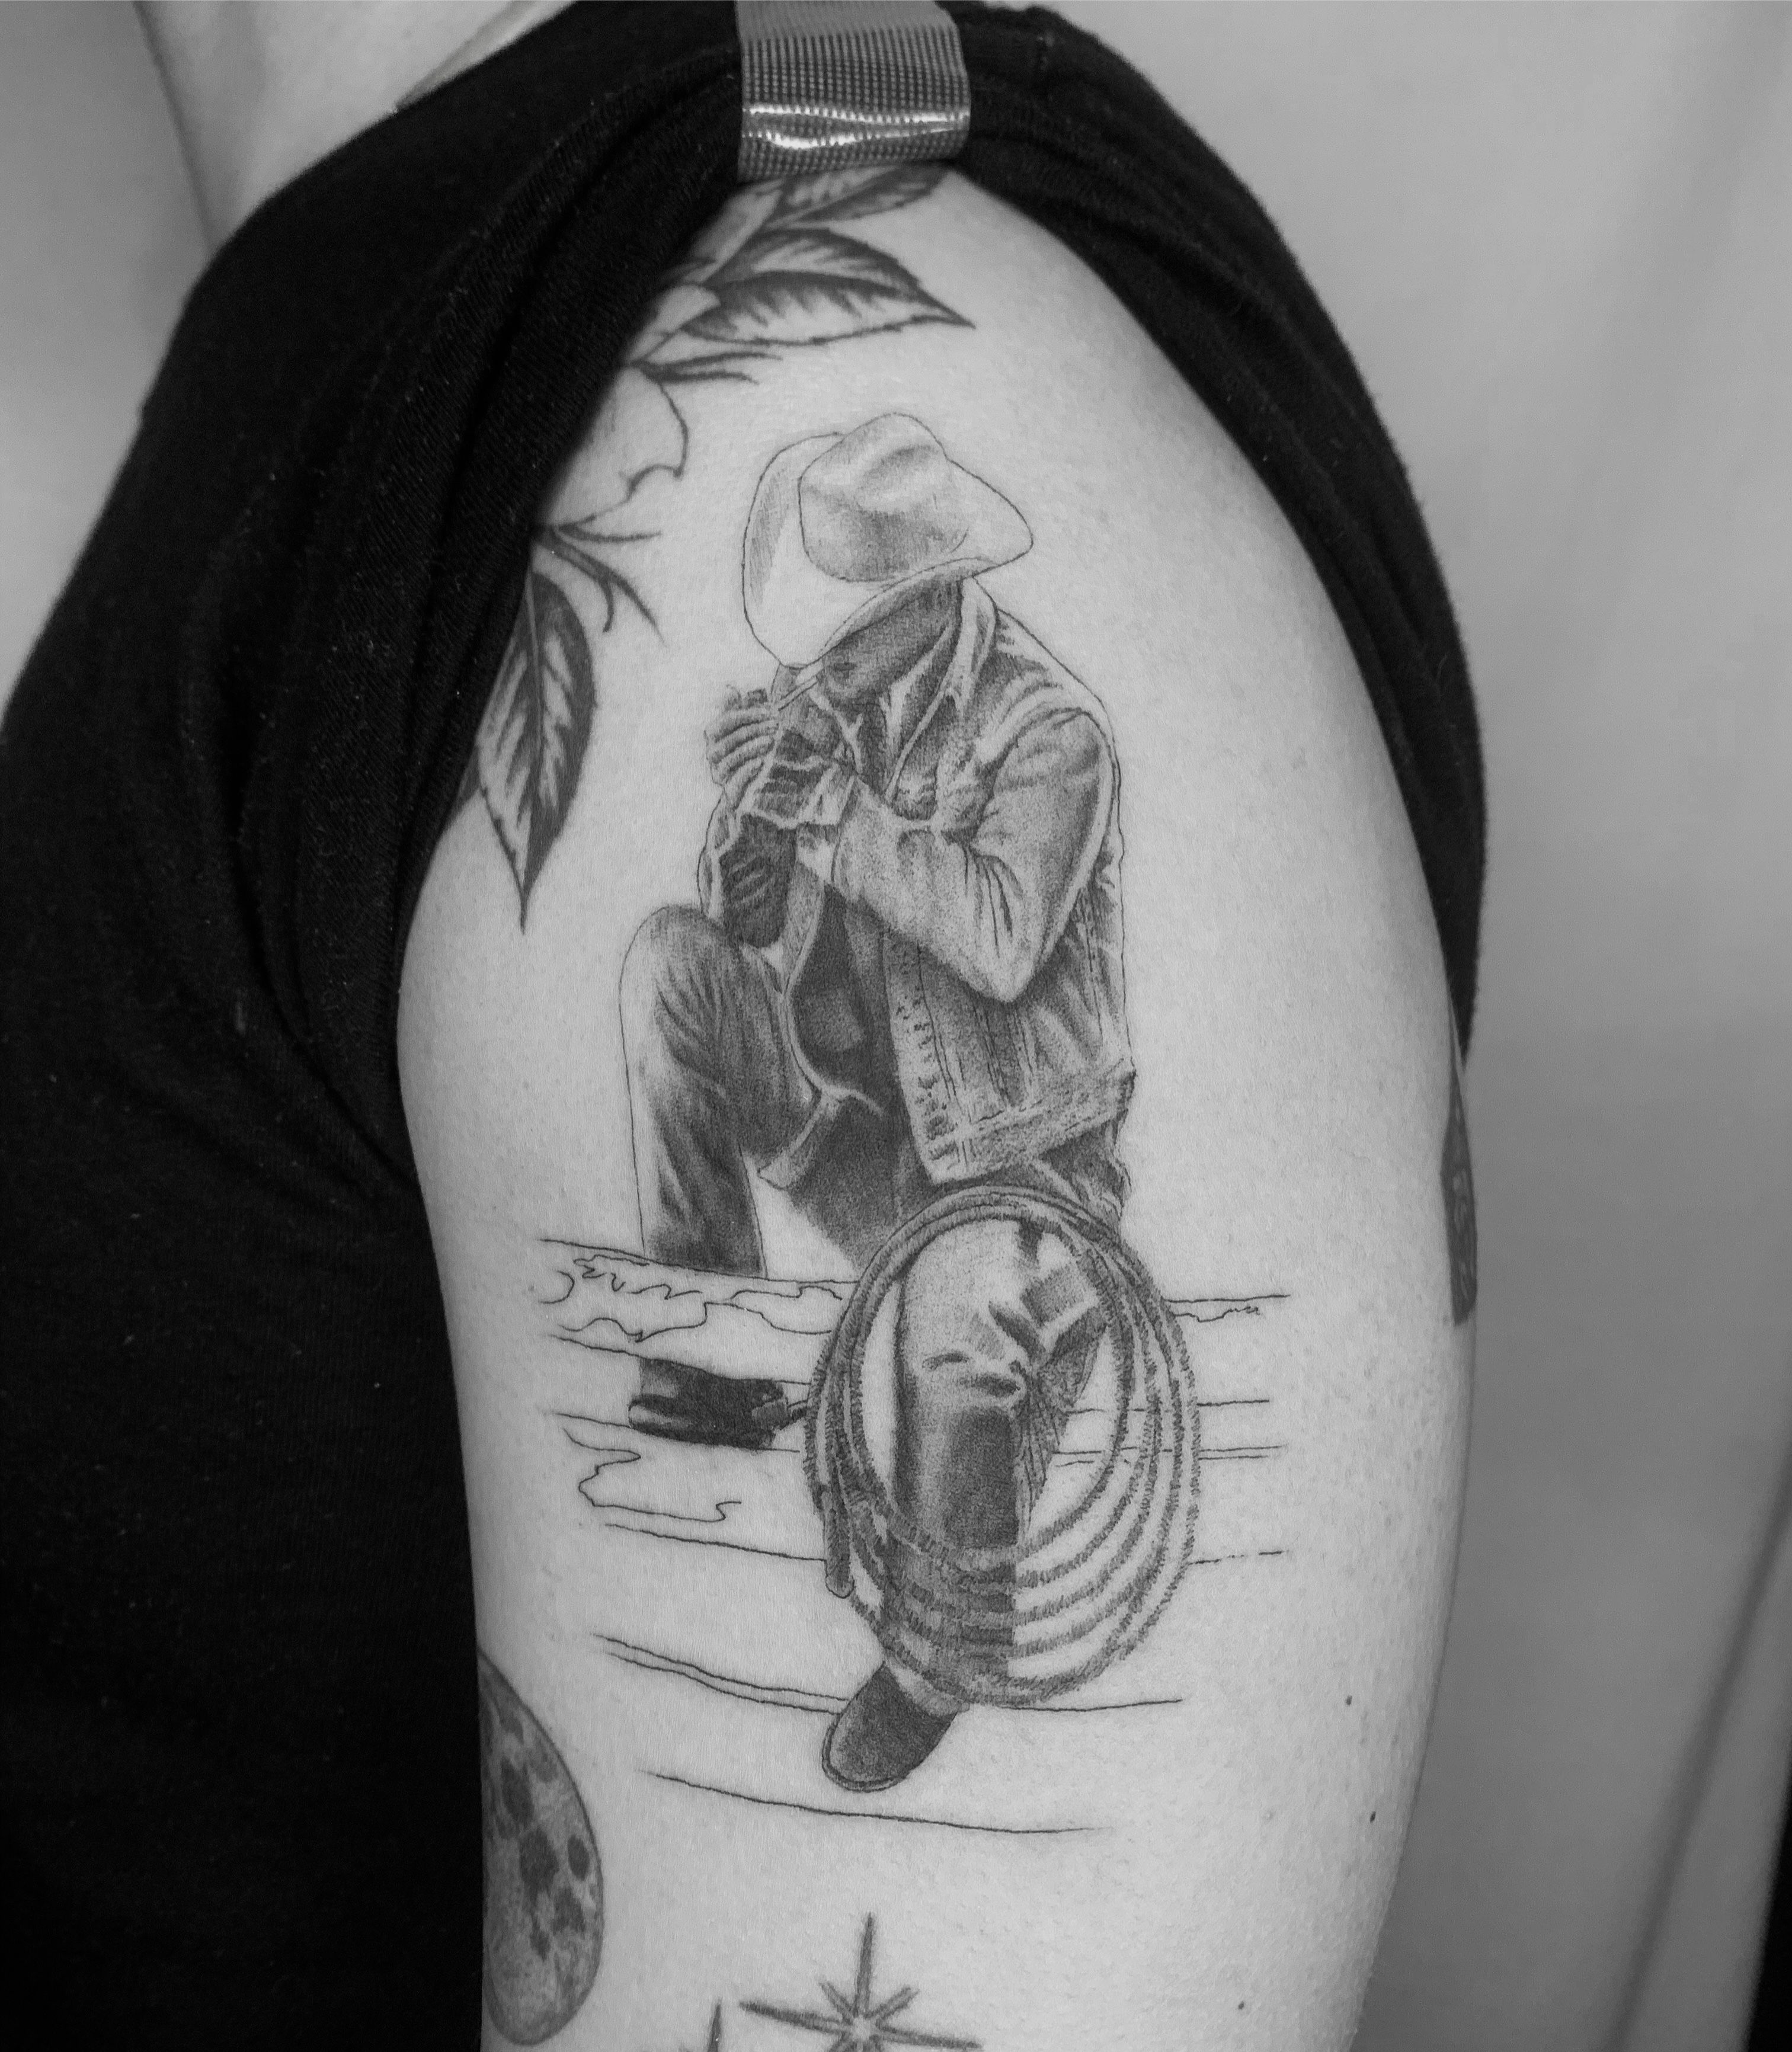 Cowboy Bebop tattoo done by Nick Moore at Surf n Ink tattoo  Gold Coast  Australia  rtattoos